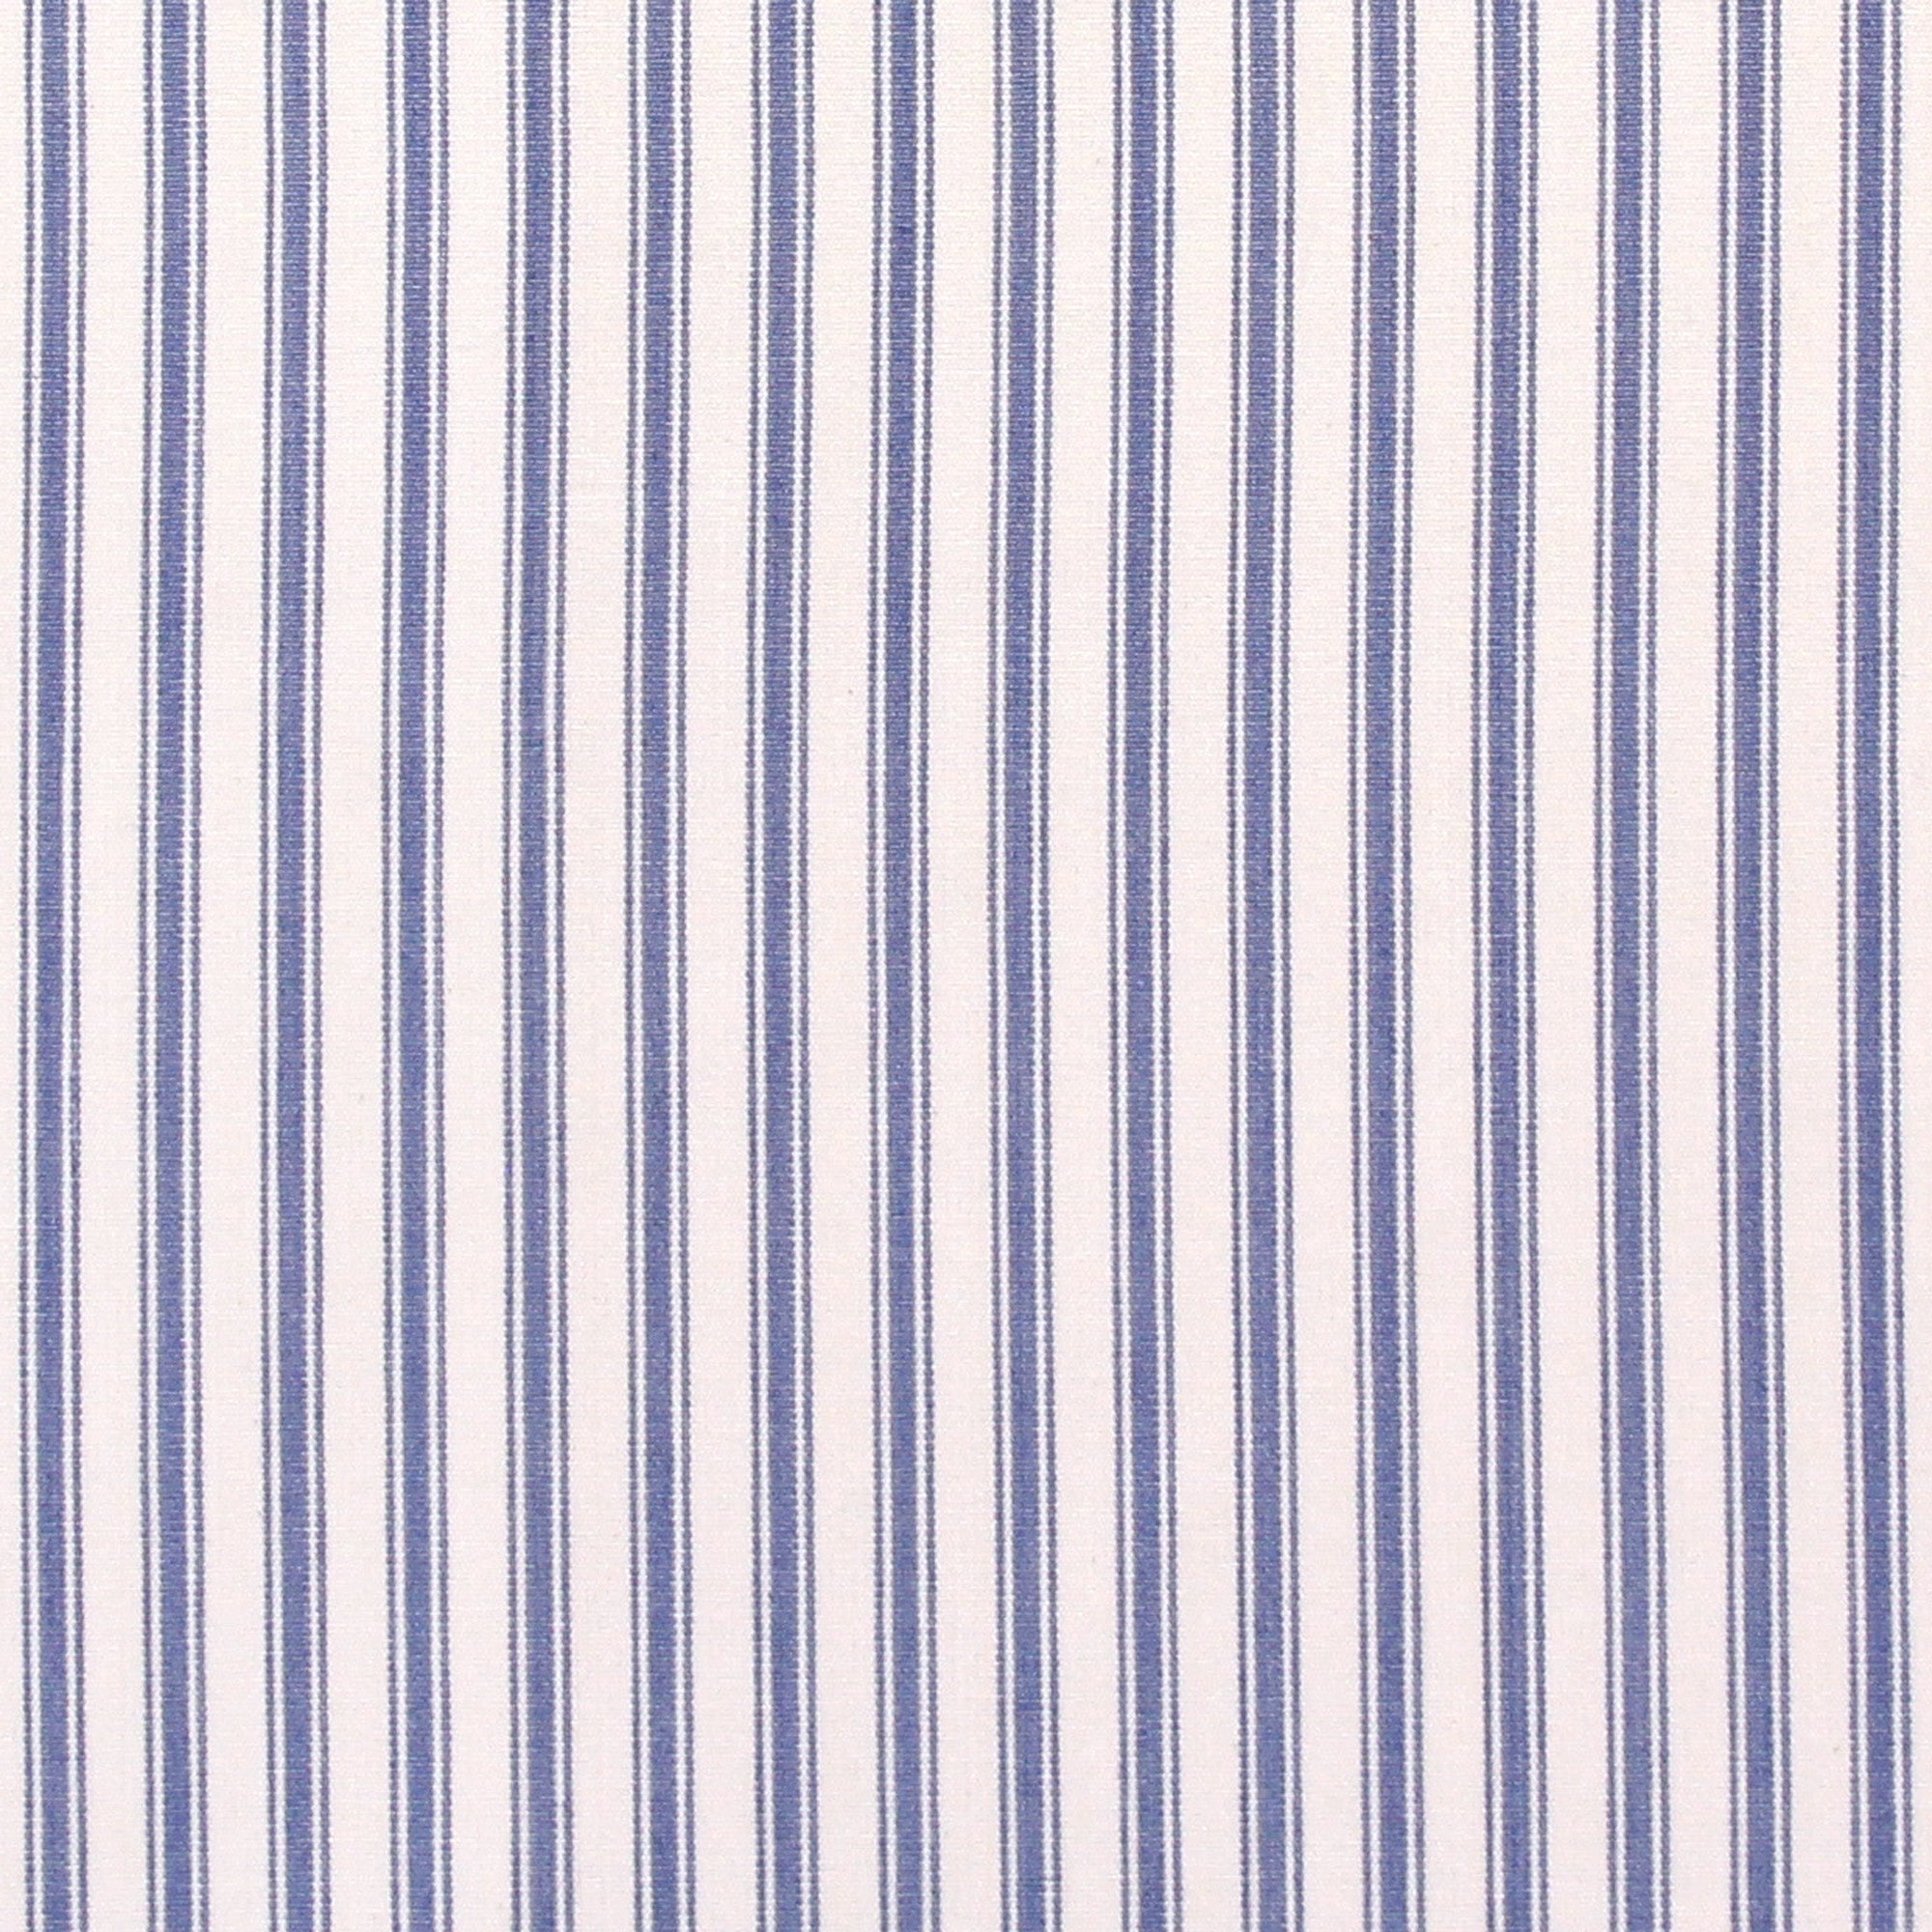 Parish Stripe Fabric in Baltic Blue Cotton Ticking Piece 3